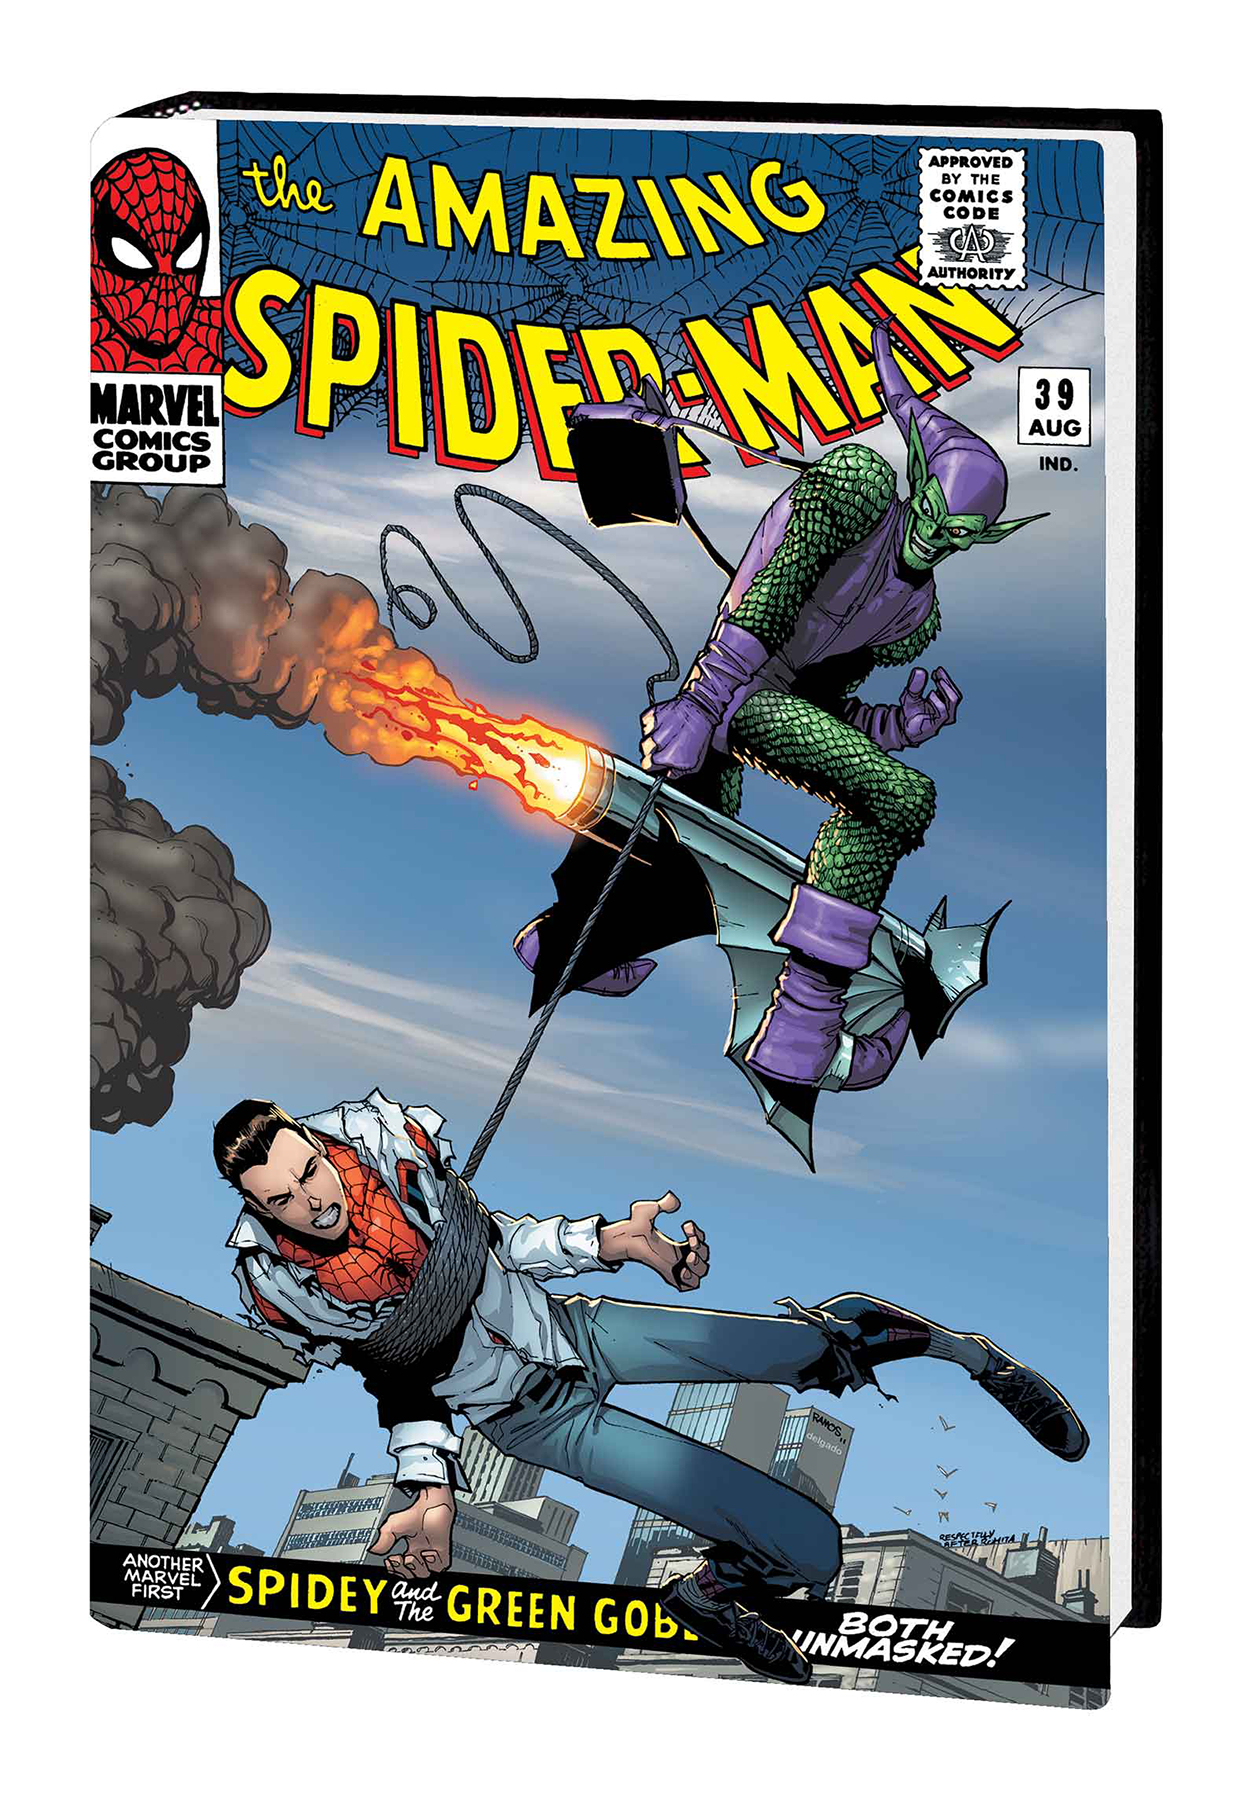 Amazing Spider-Man Omnibus Hardcover Volume 2 Ramos Cover New Printing